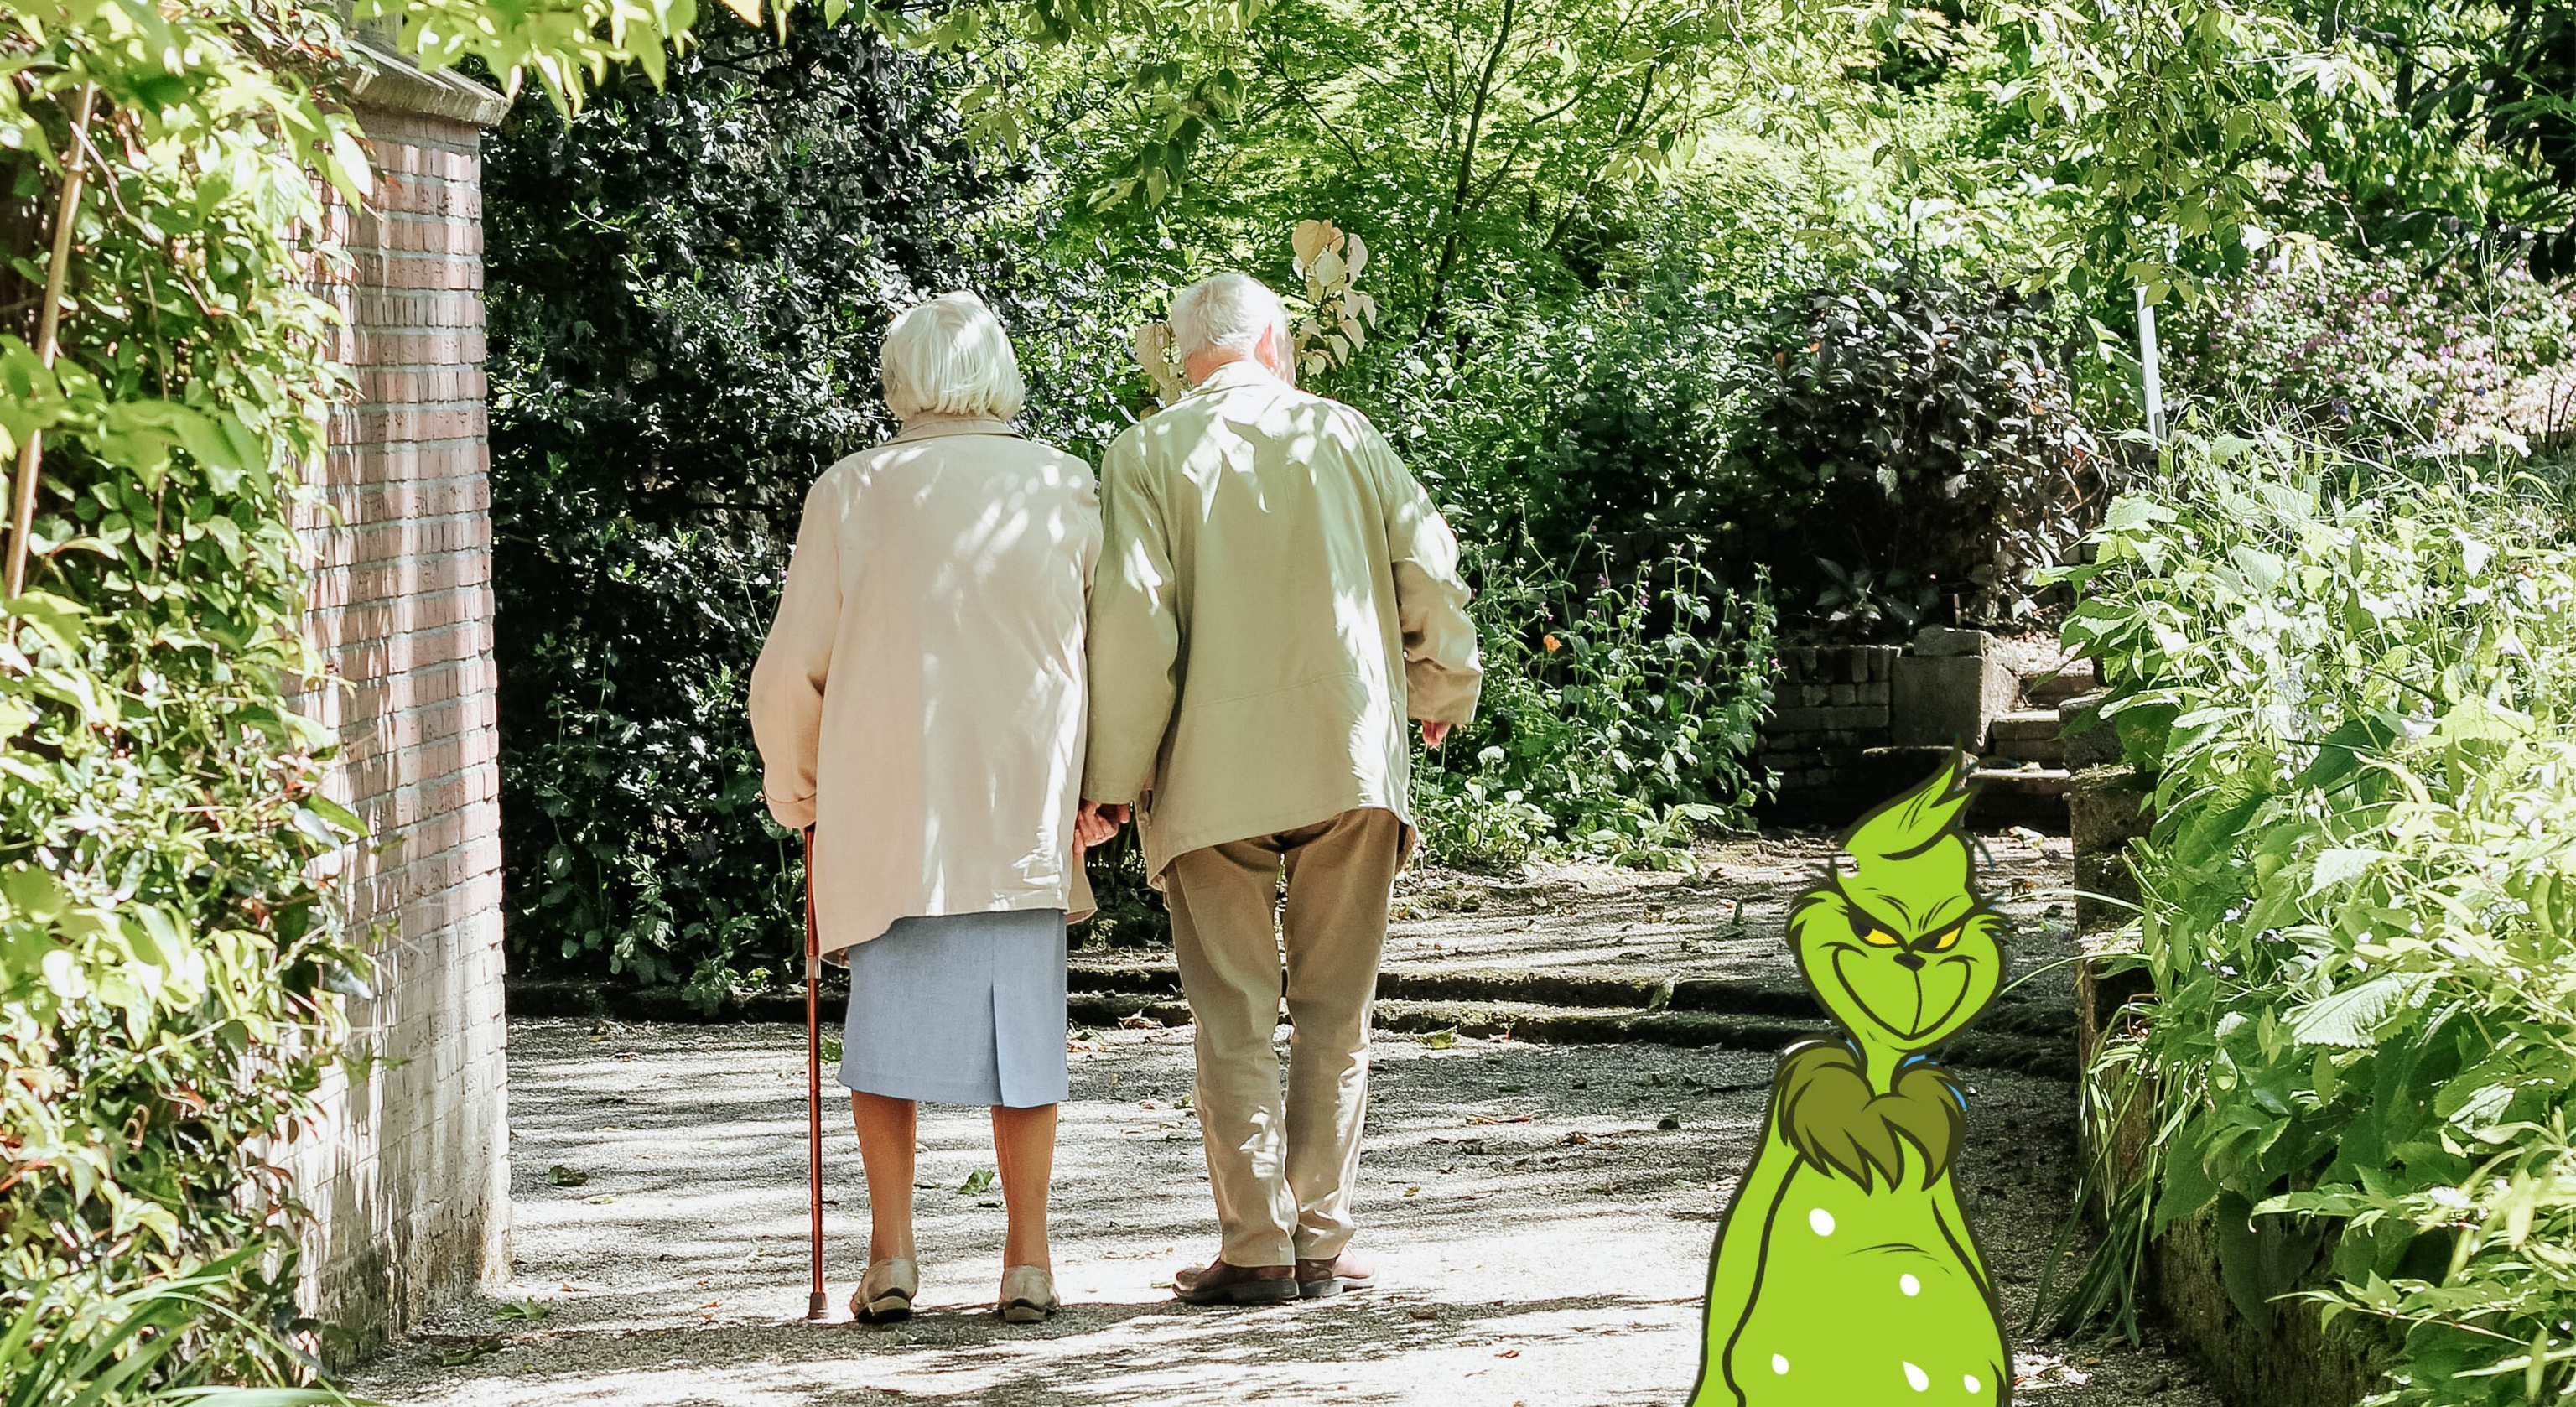 An elderly couple walking down a garden path.